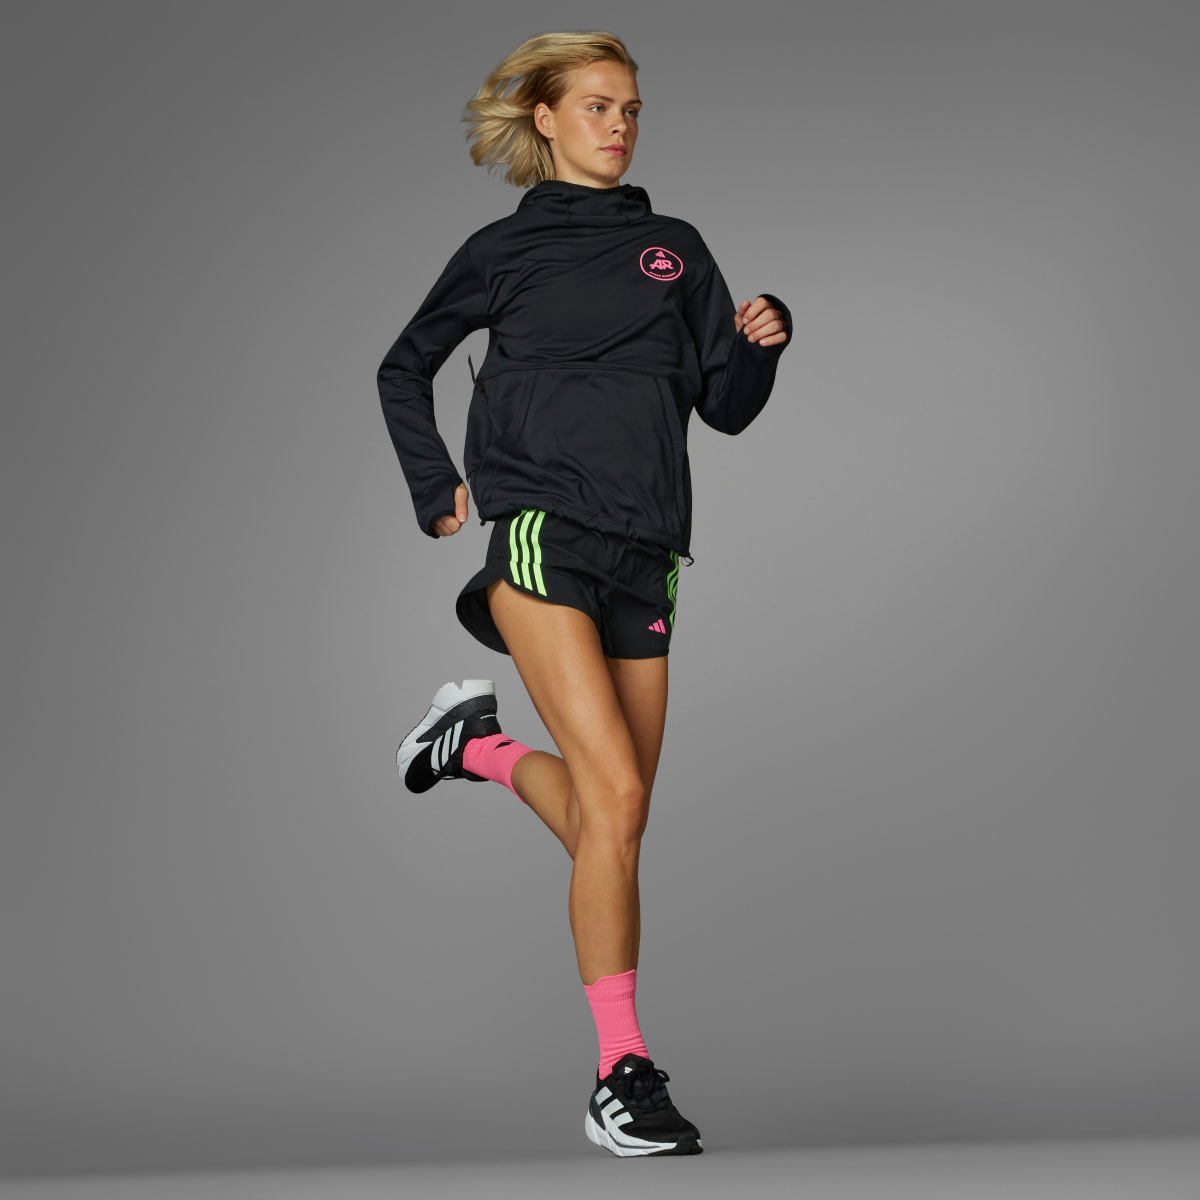 Adidas Own the Run adidas Runners Hoodie (Gender Neutral). 4